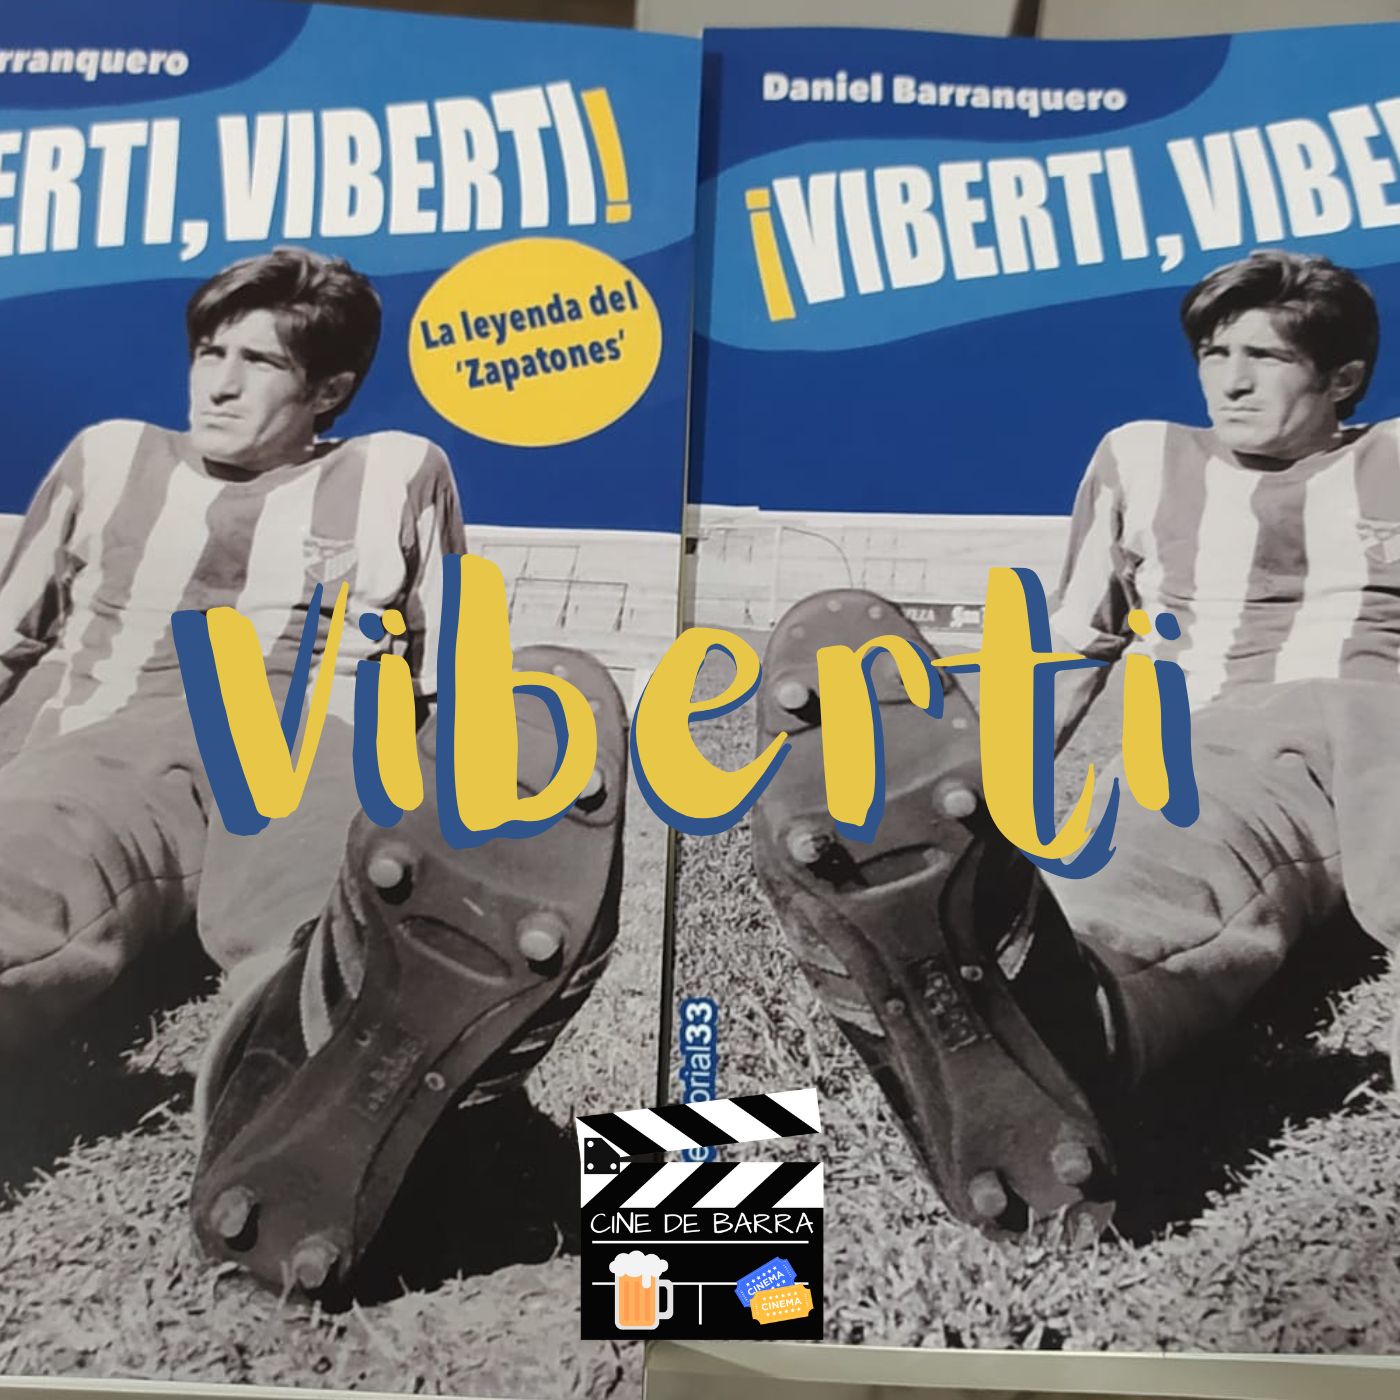 Cine de barra 7x02 - Viberti, Viberti la Leyenda del Zapatones con su autor Daniel Barranquero